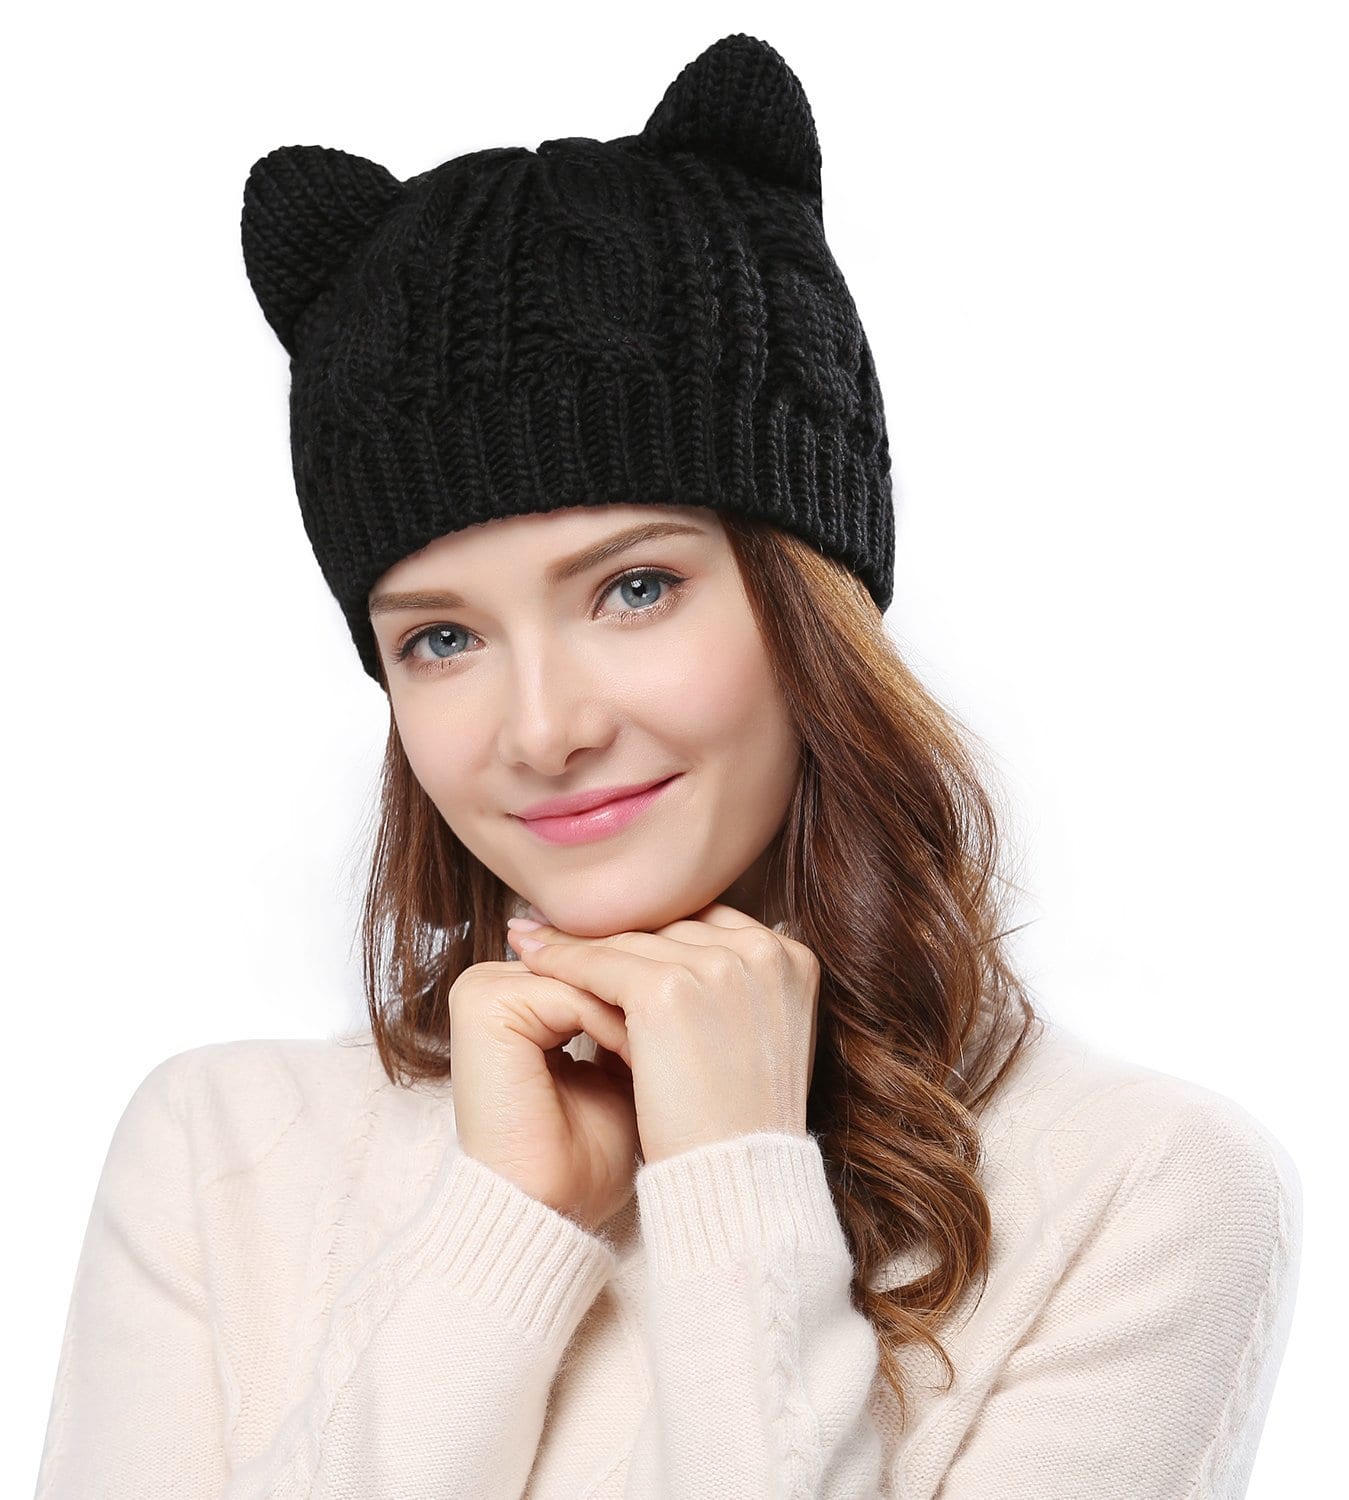 Black cat knit beanie